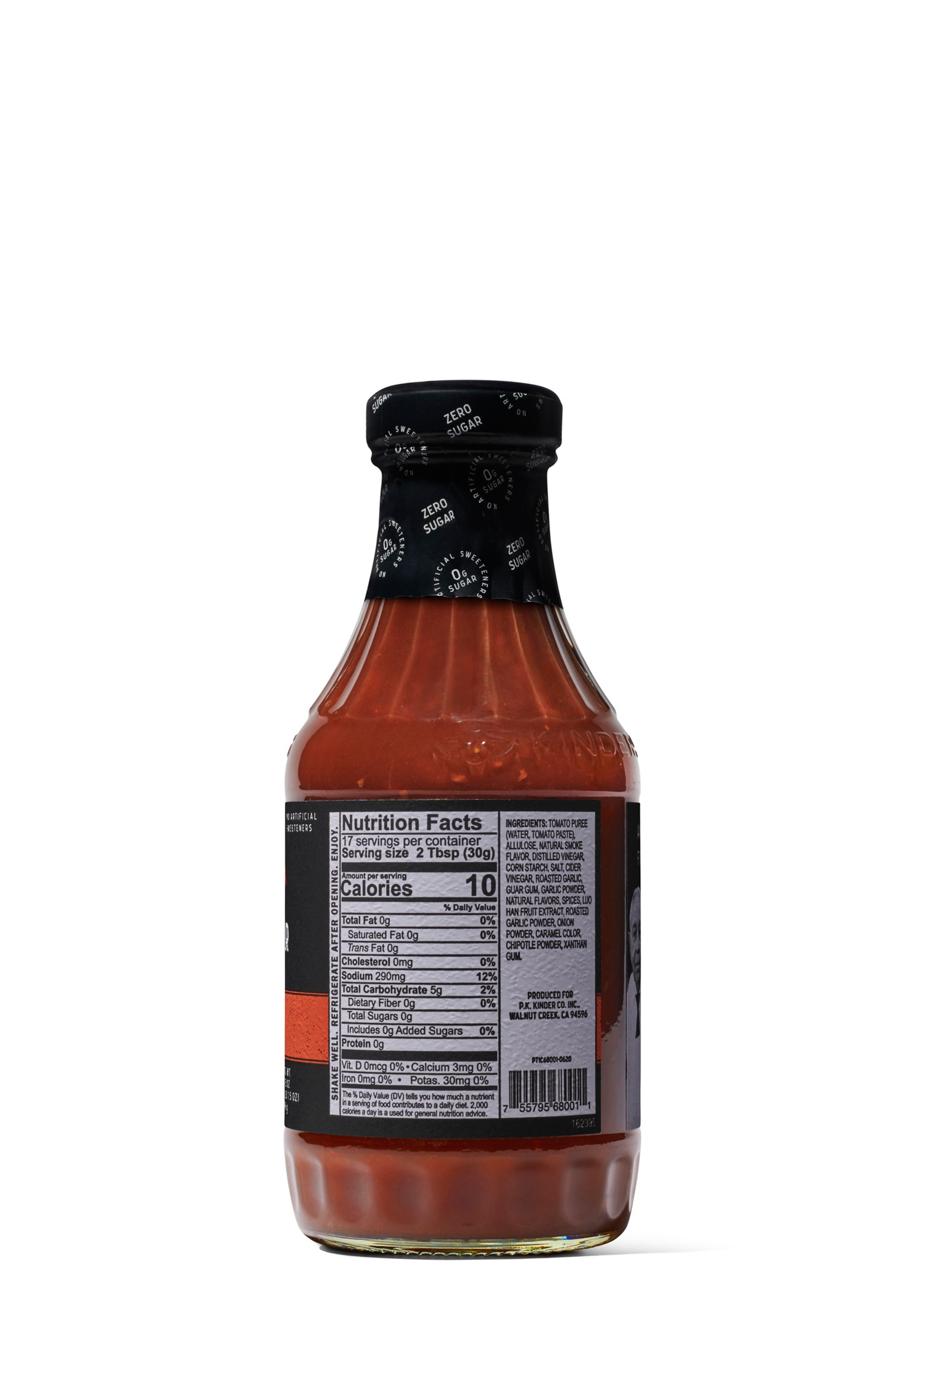 Kinder's Zero Sugar Original BBQ Sauce; image 3 of 3